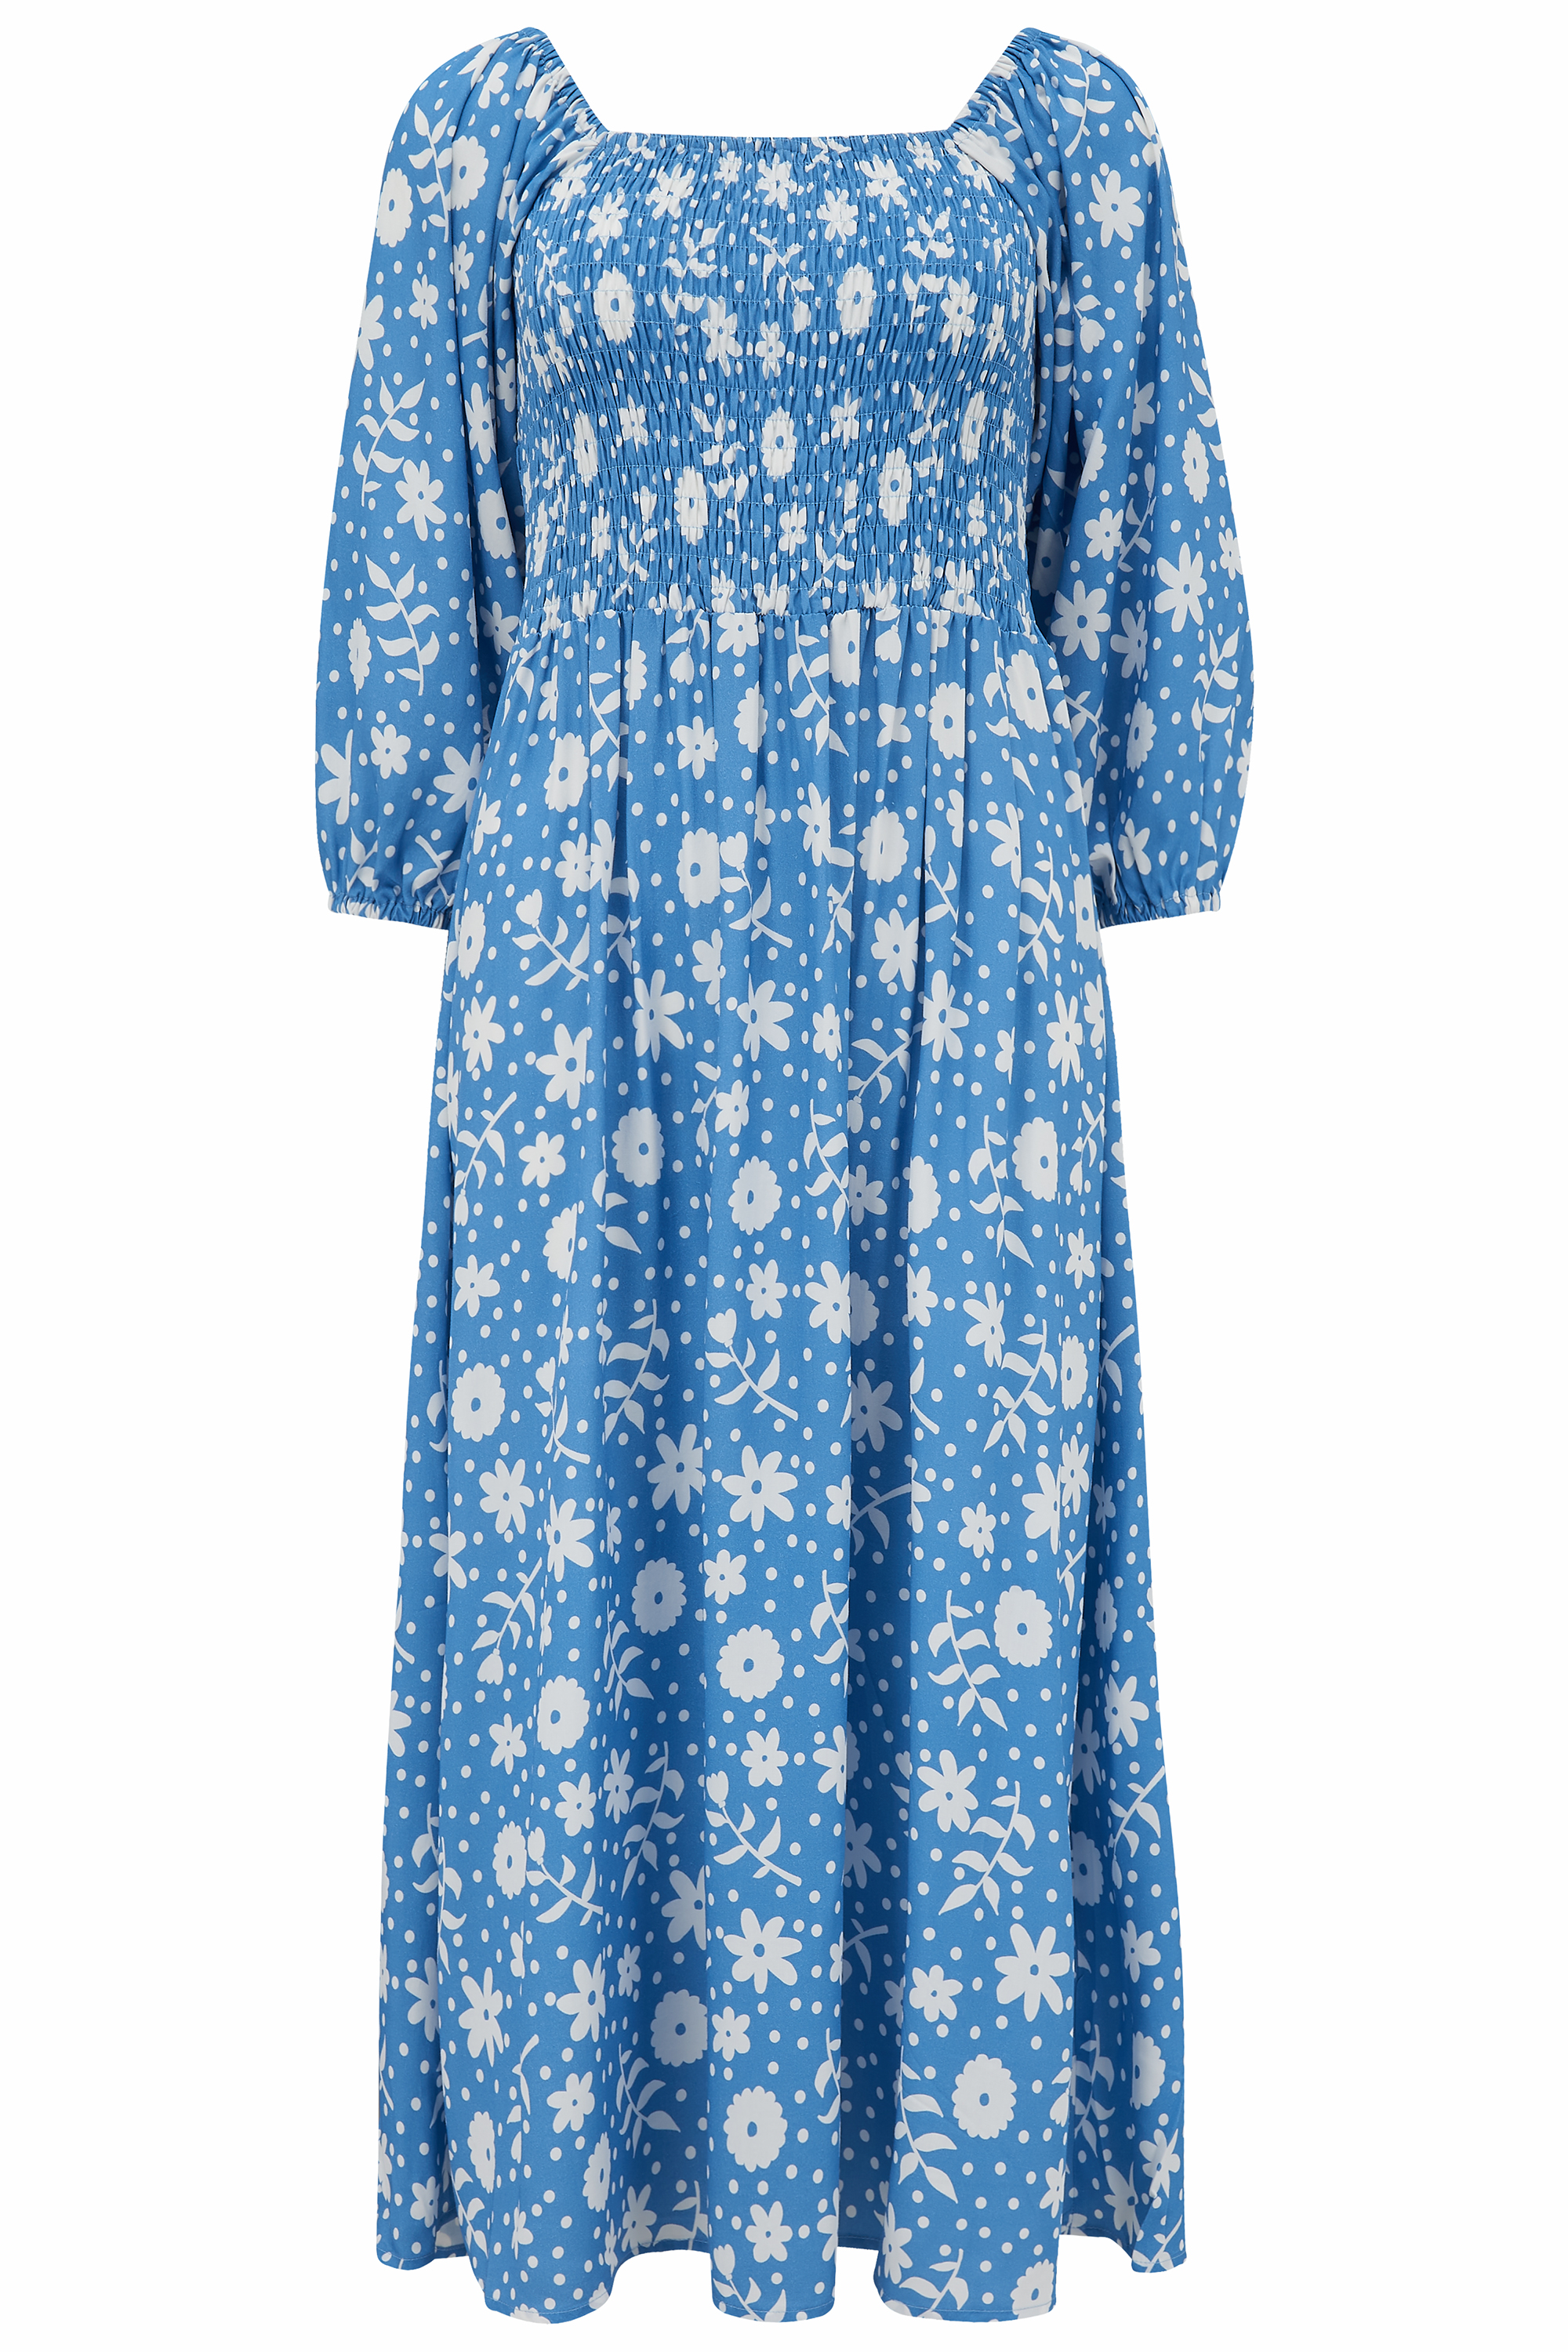 Sugarhill Brighton Raquel Shirred Dress - Blue, Vintage Block Floral